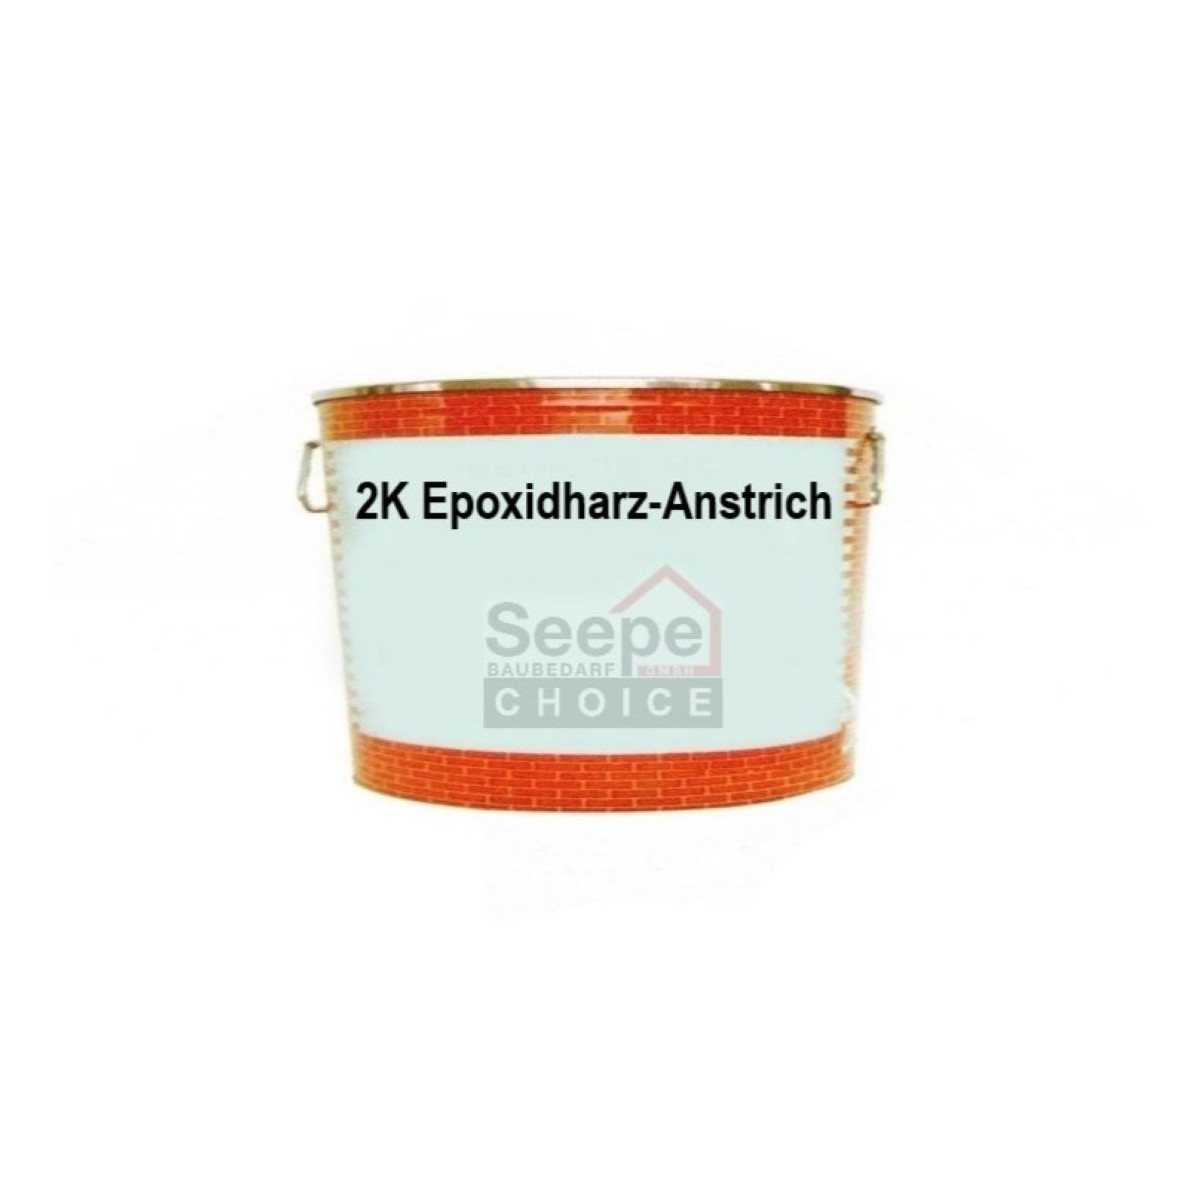 2-komp. Epoxidharz-Anstrich